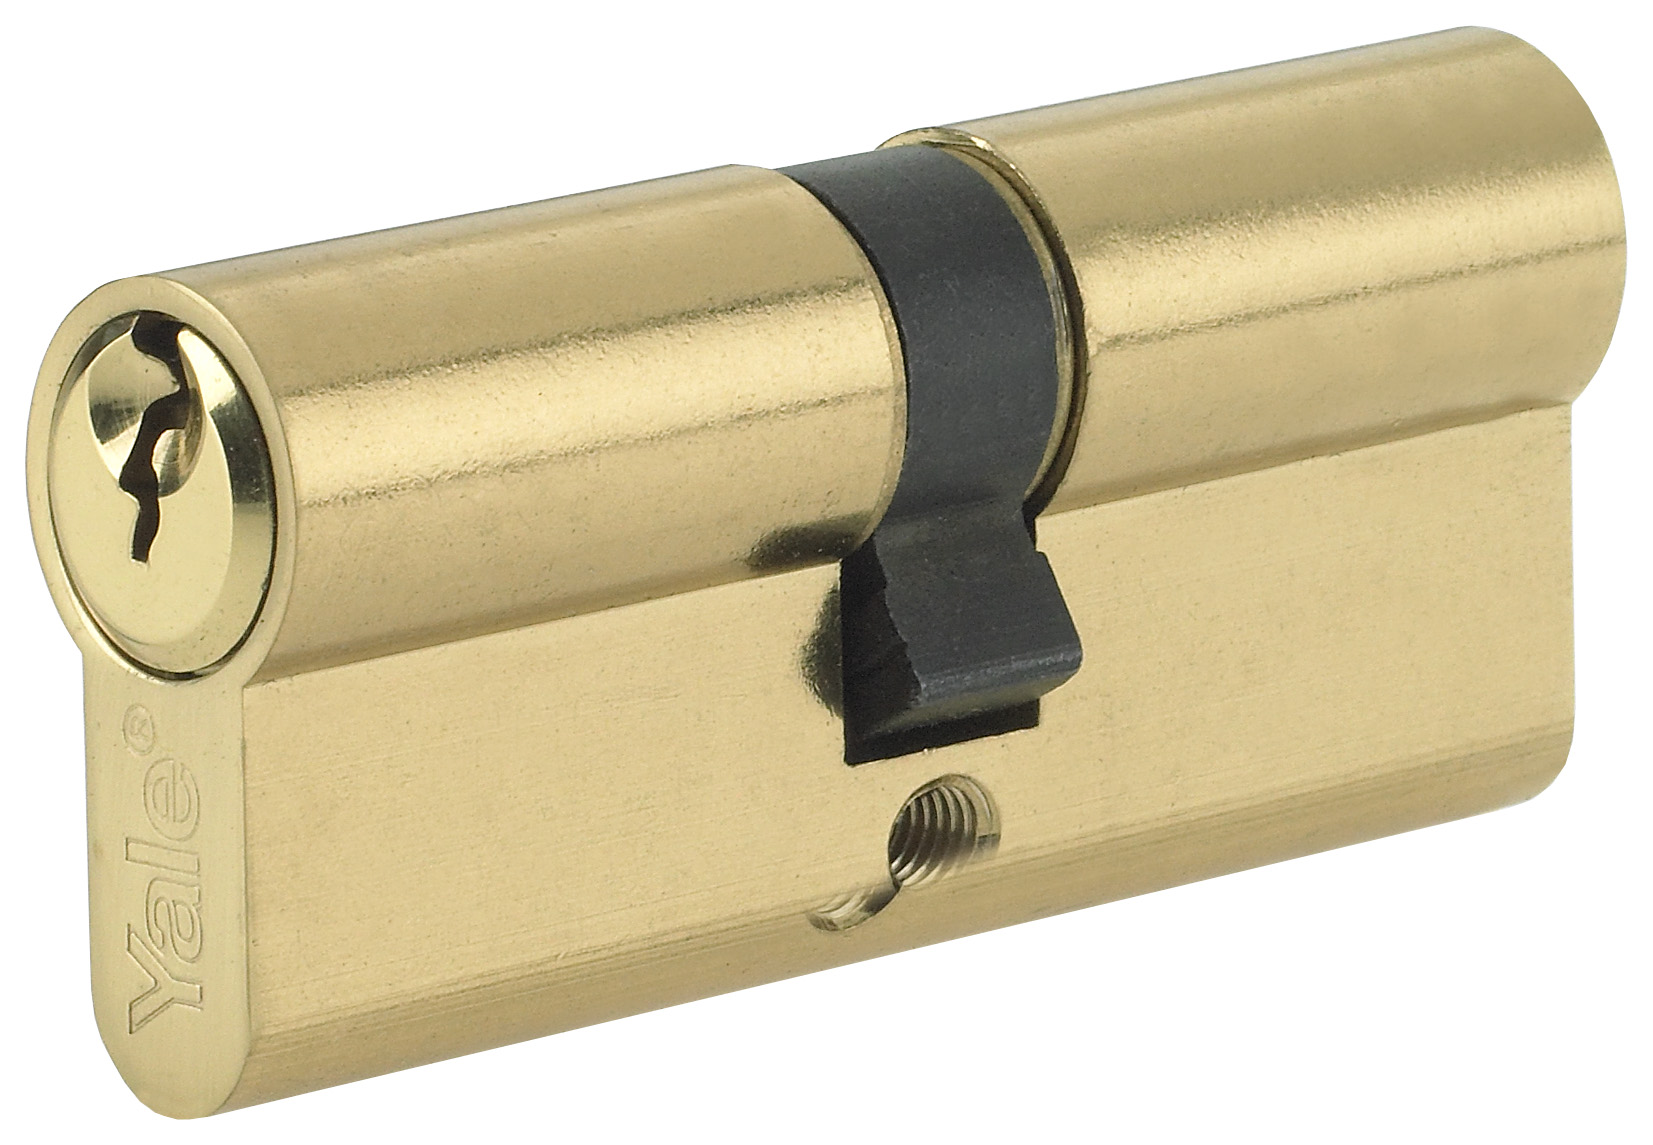 Yale P-ED3540-PB Euro Profile Brass Cylinder Lock - 35 x 10 x 40mm